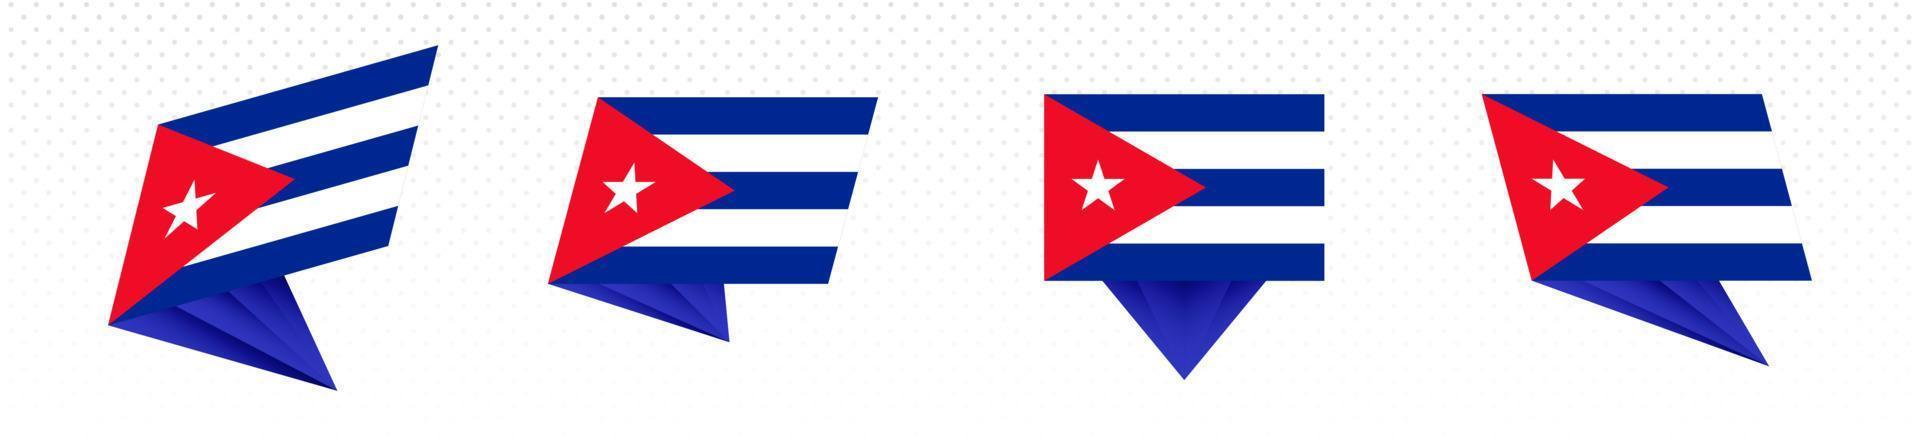 Flag of Cuba in modern abstract design, flag set. vector